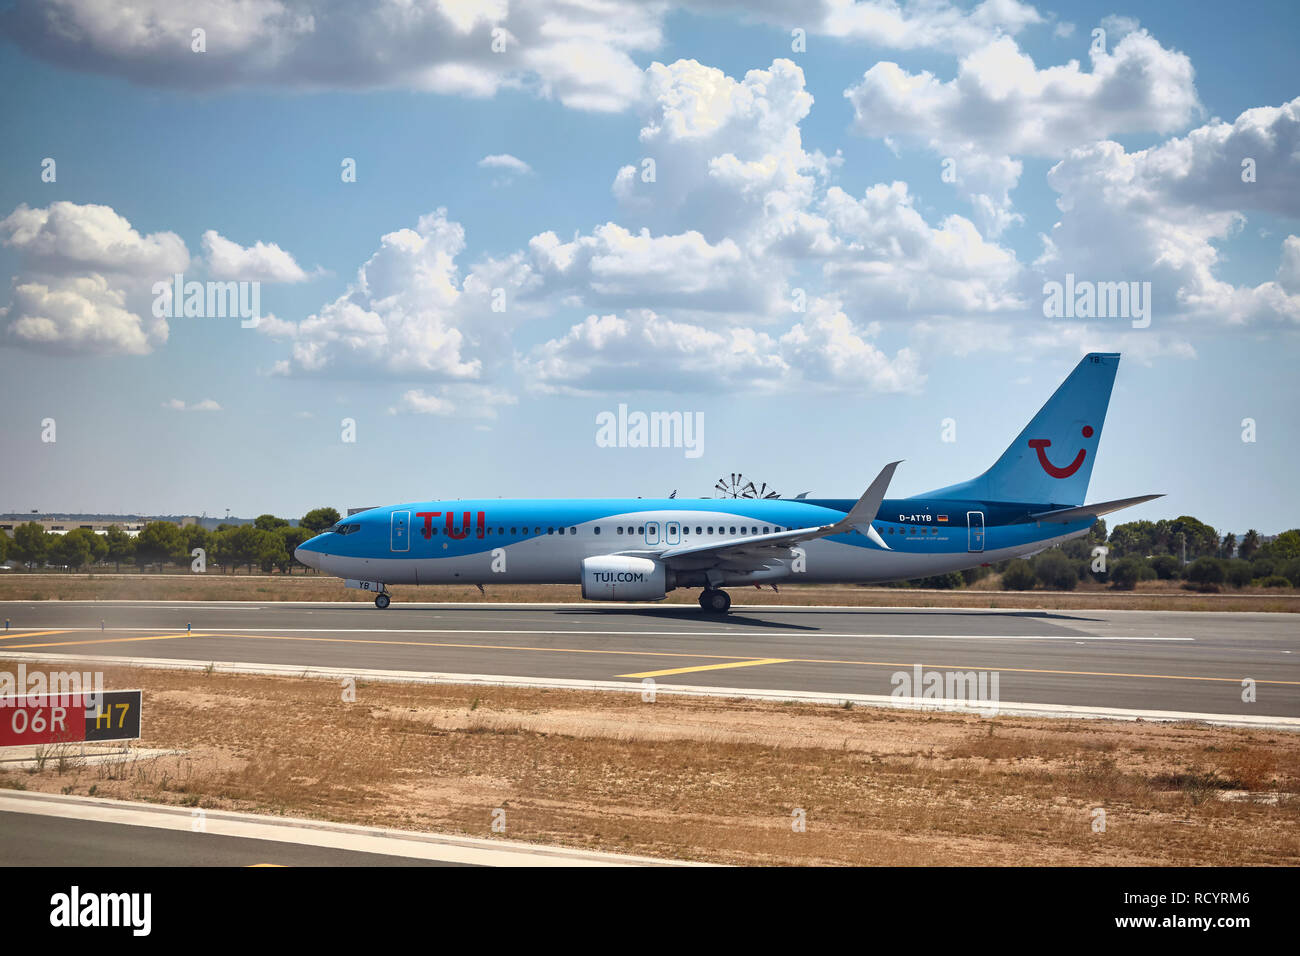 Palma de Mallorca, Spanien - 21. August 2018: TUI Operator Boeing 737 800 Taxis auf dem Asphalt. Stockfoto